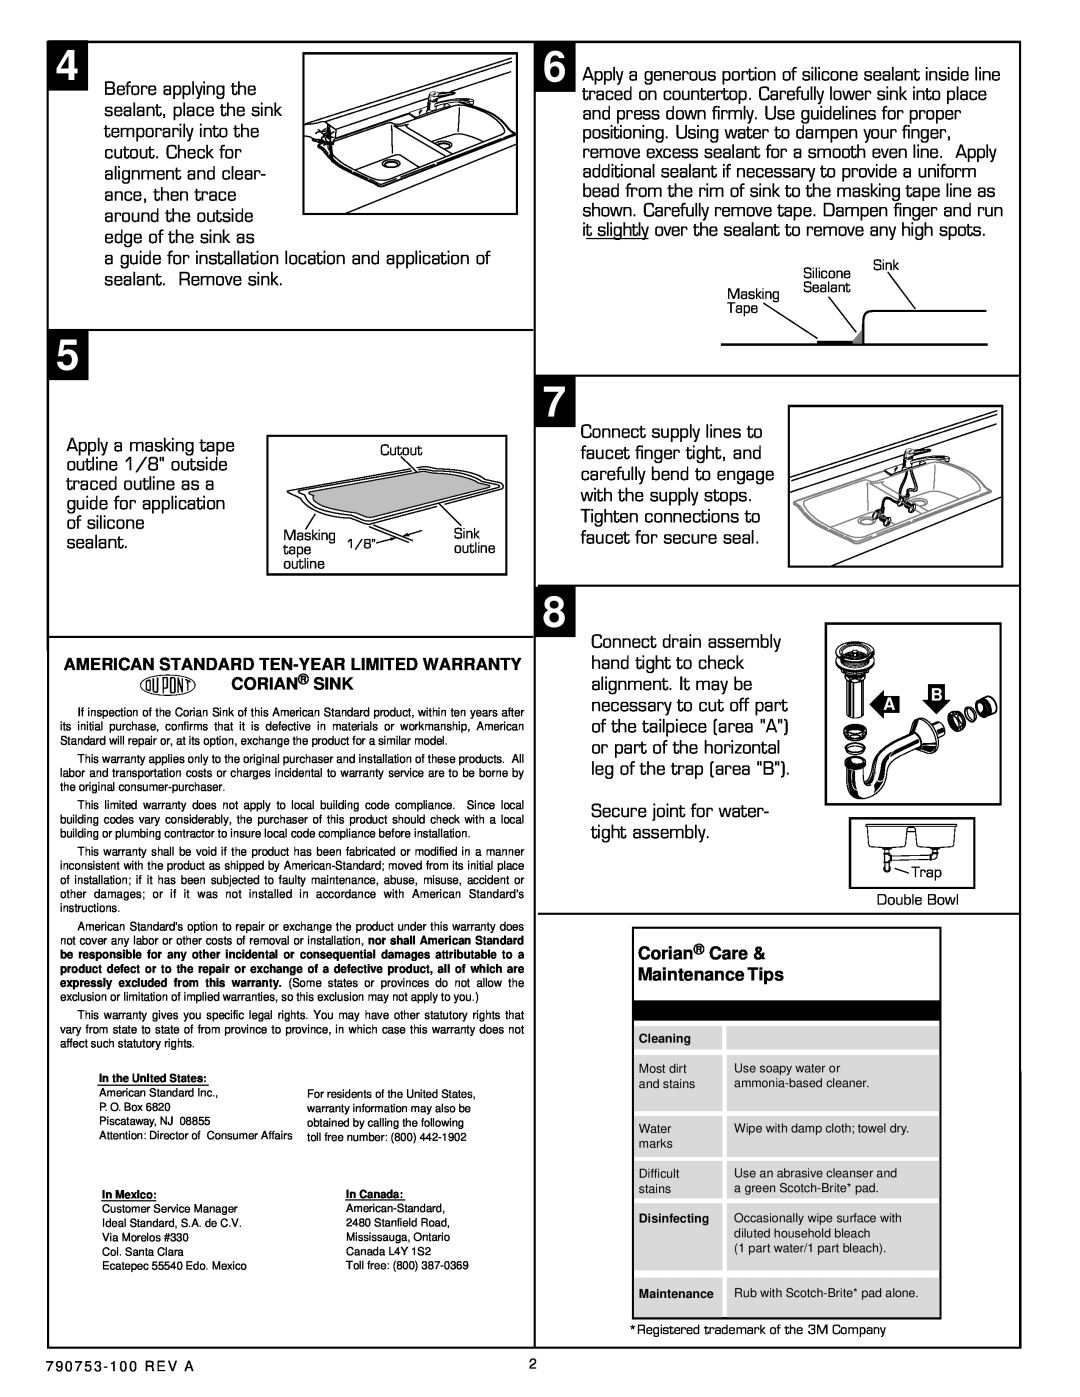 American Standard 7048 American Standard Ten-Year Limited Warranty Corian Sink, Corian Care Maintenance Tips 